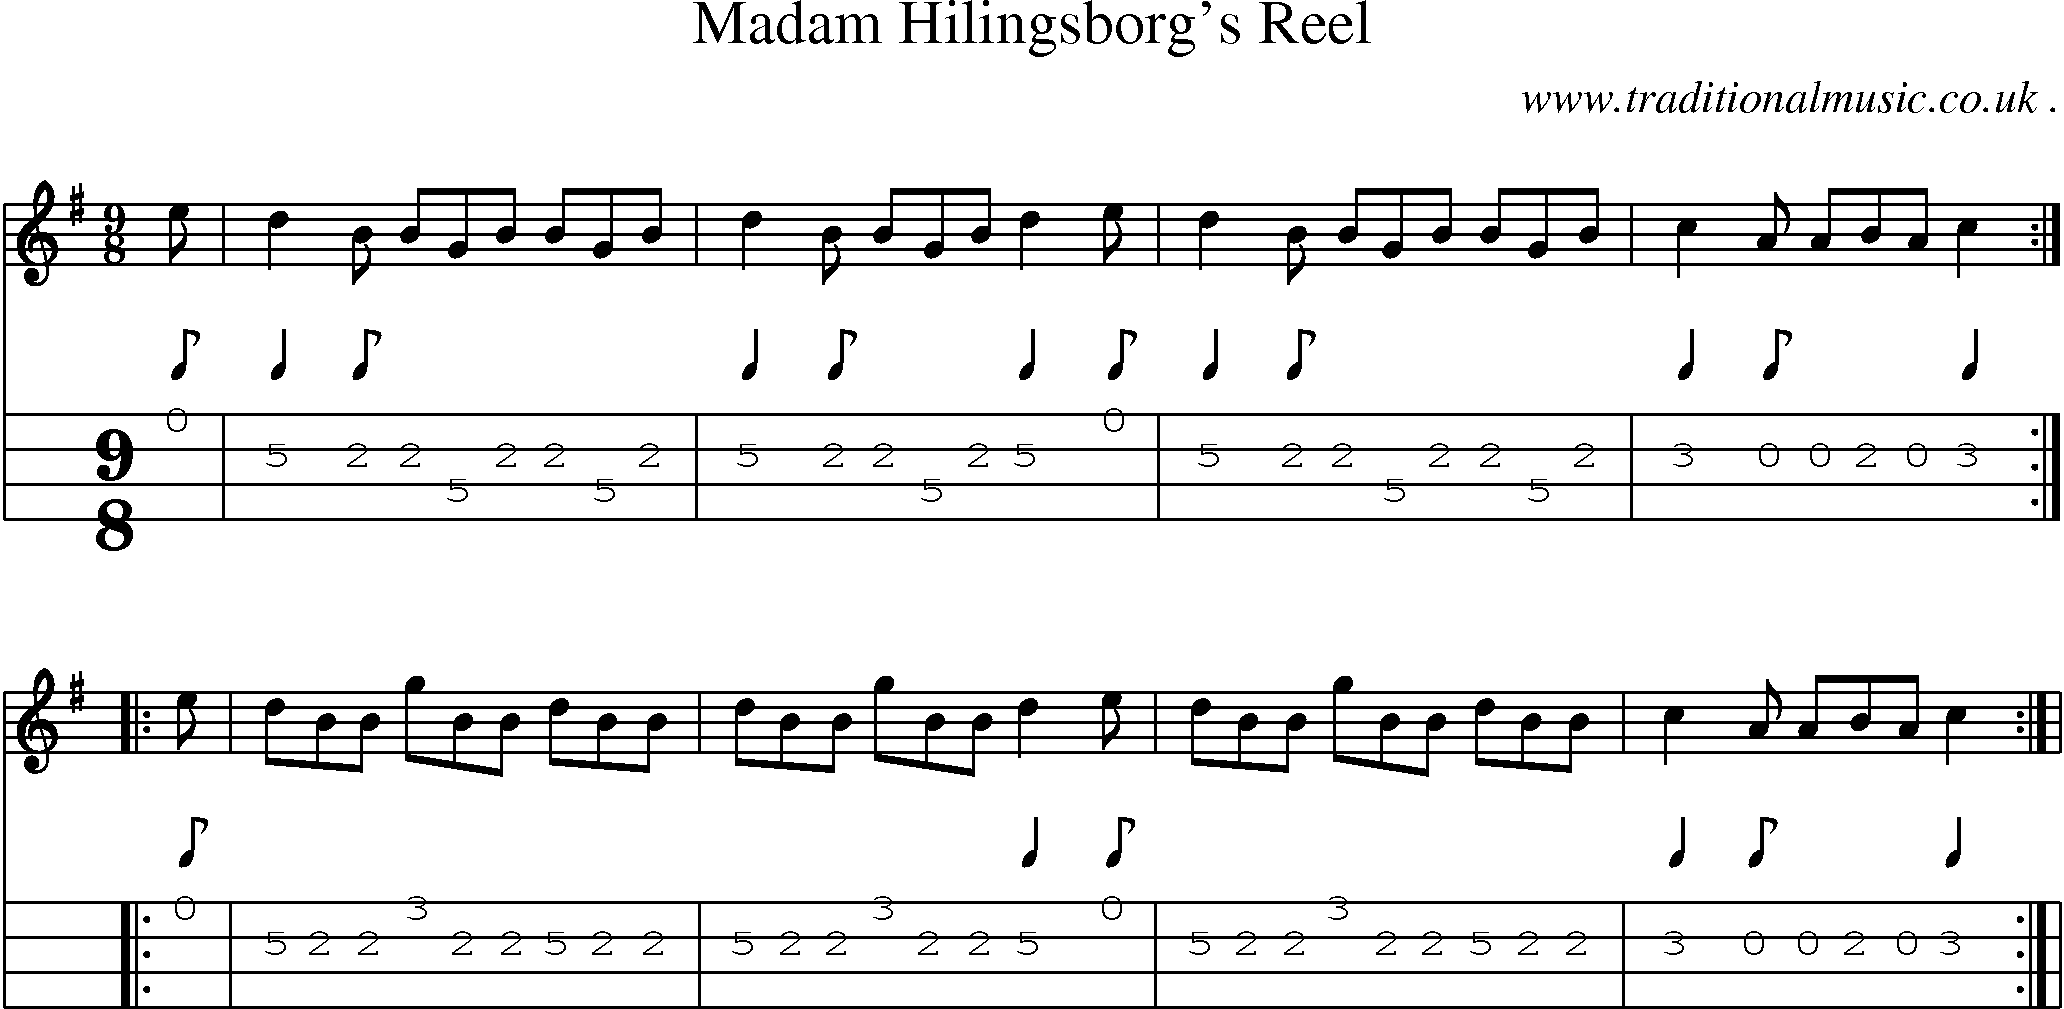 Sheet-Music and Mandolin Tabs for Madam Hilingsborgs Reel